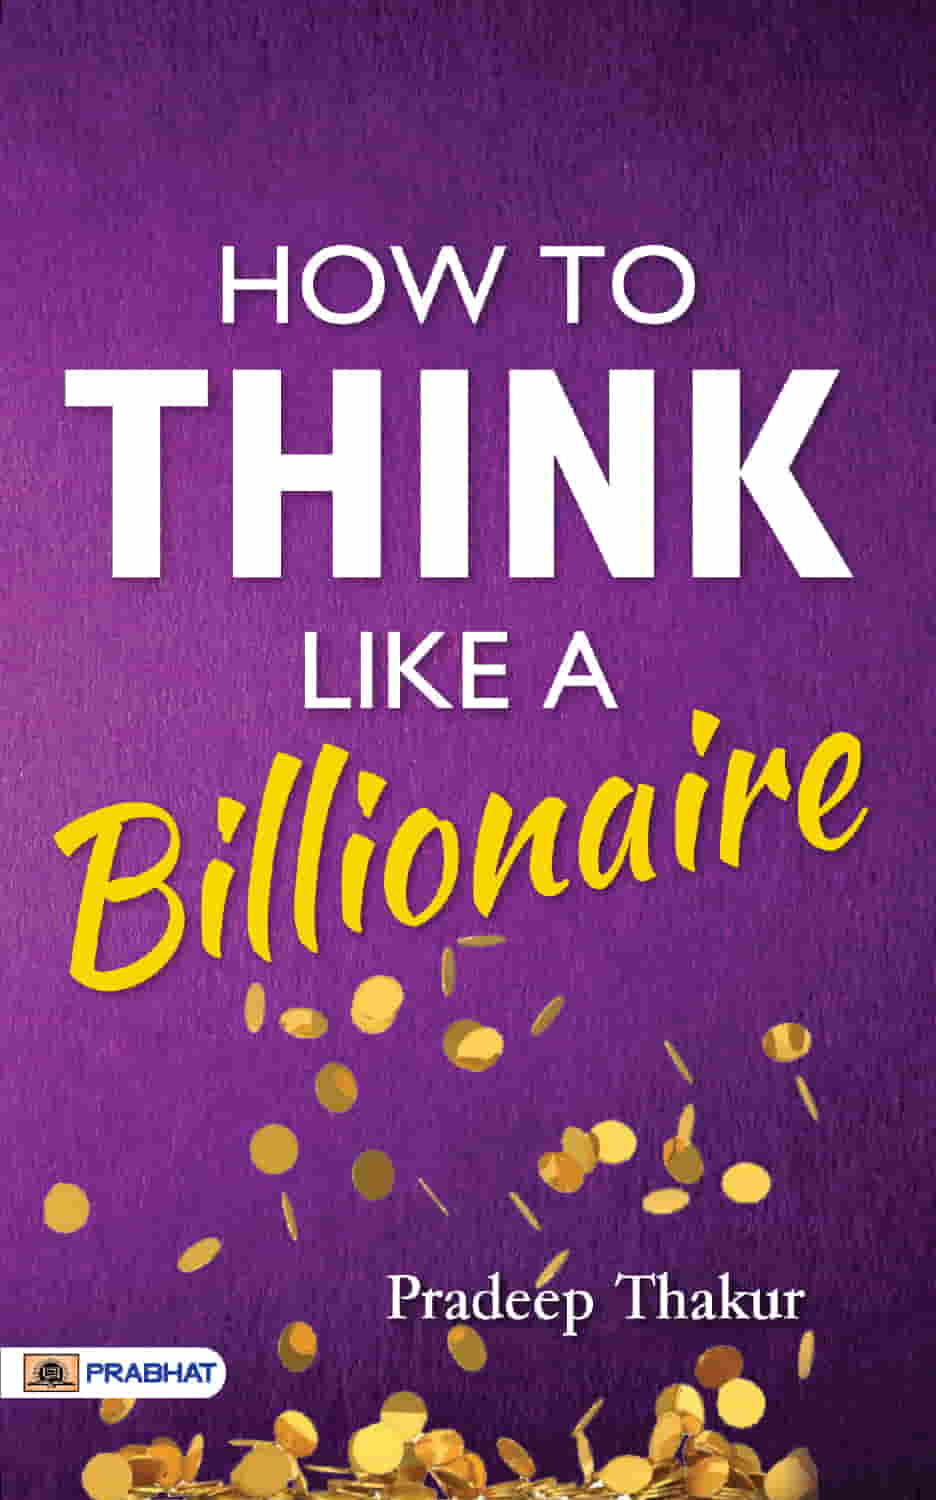 How To Think Like a Billionaire